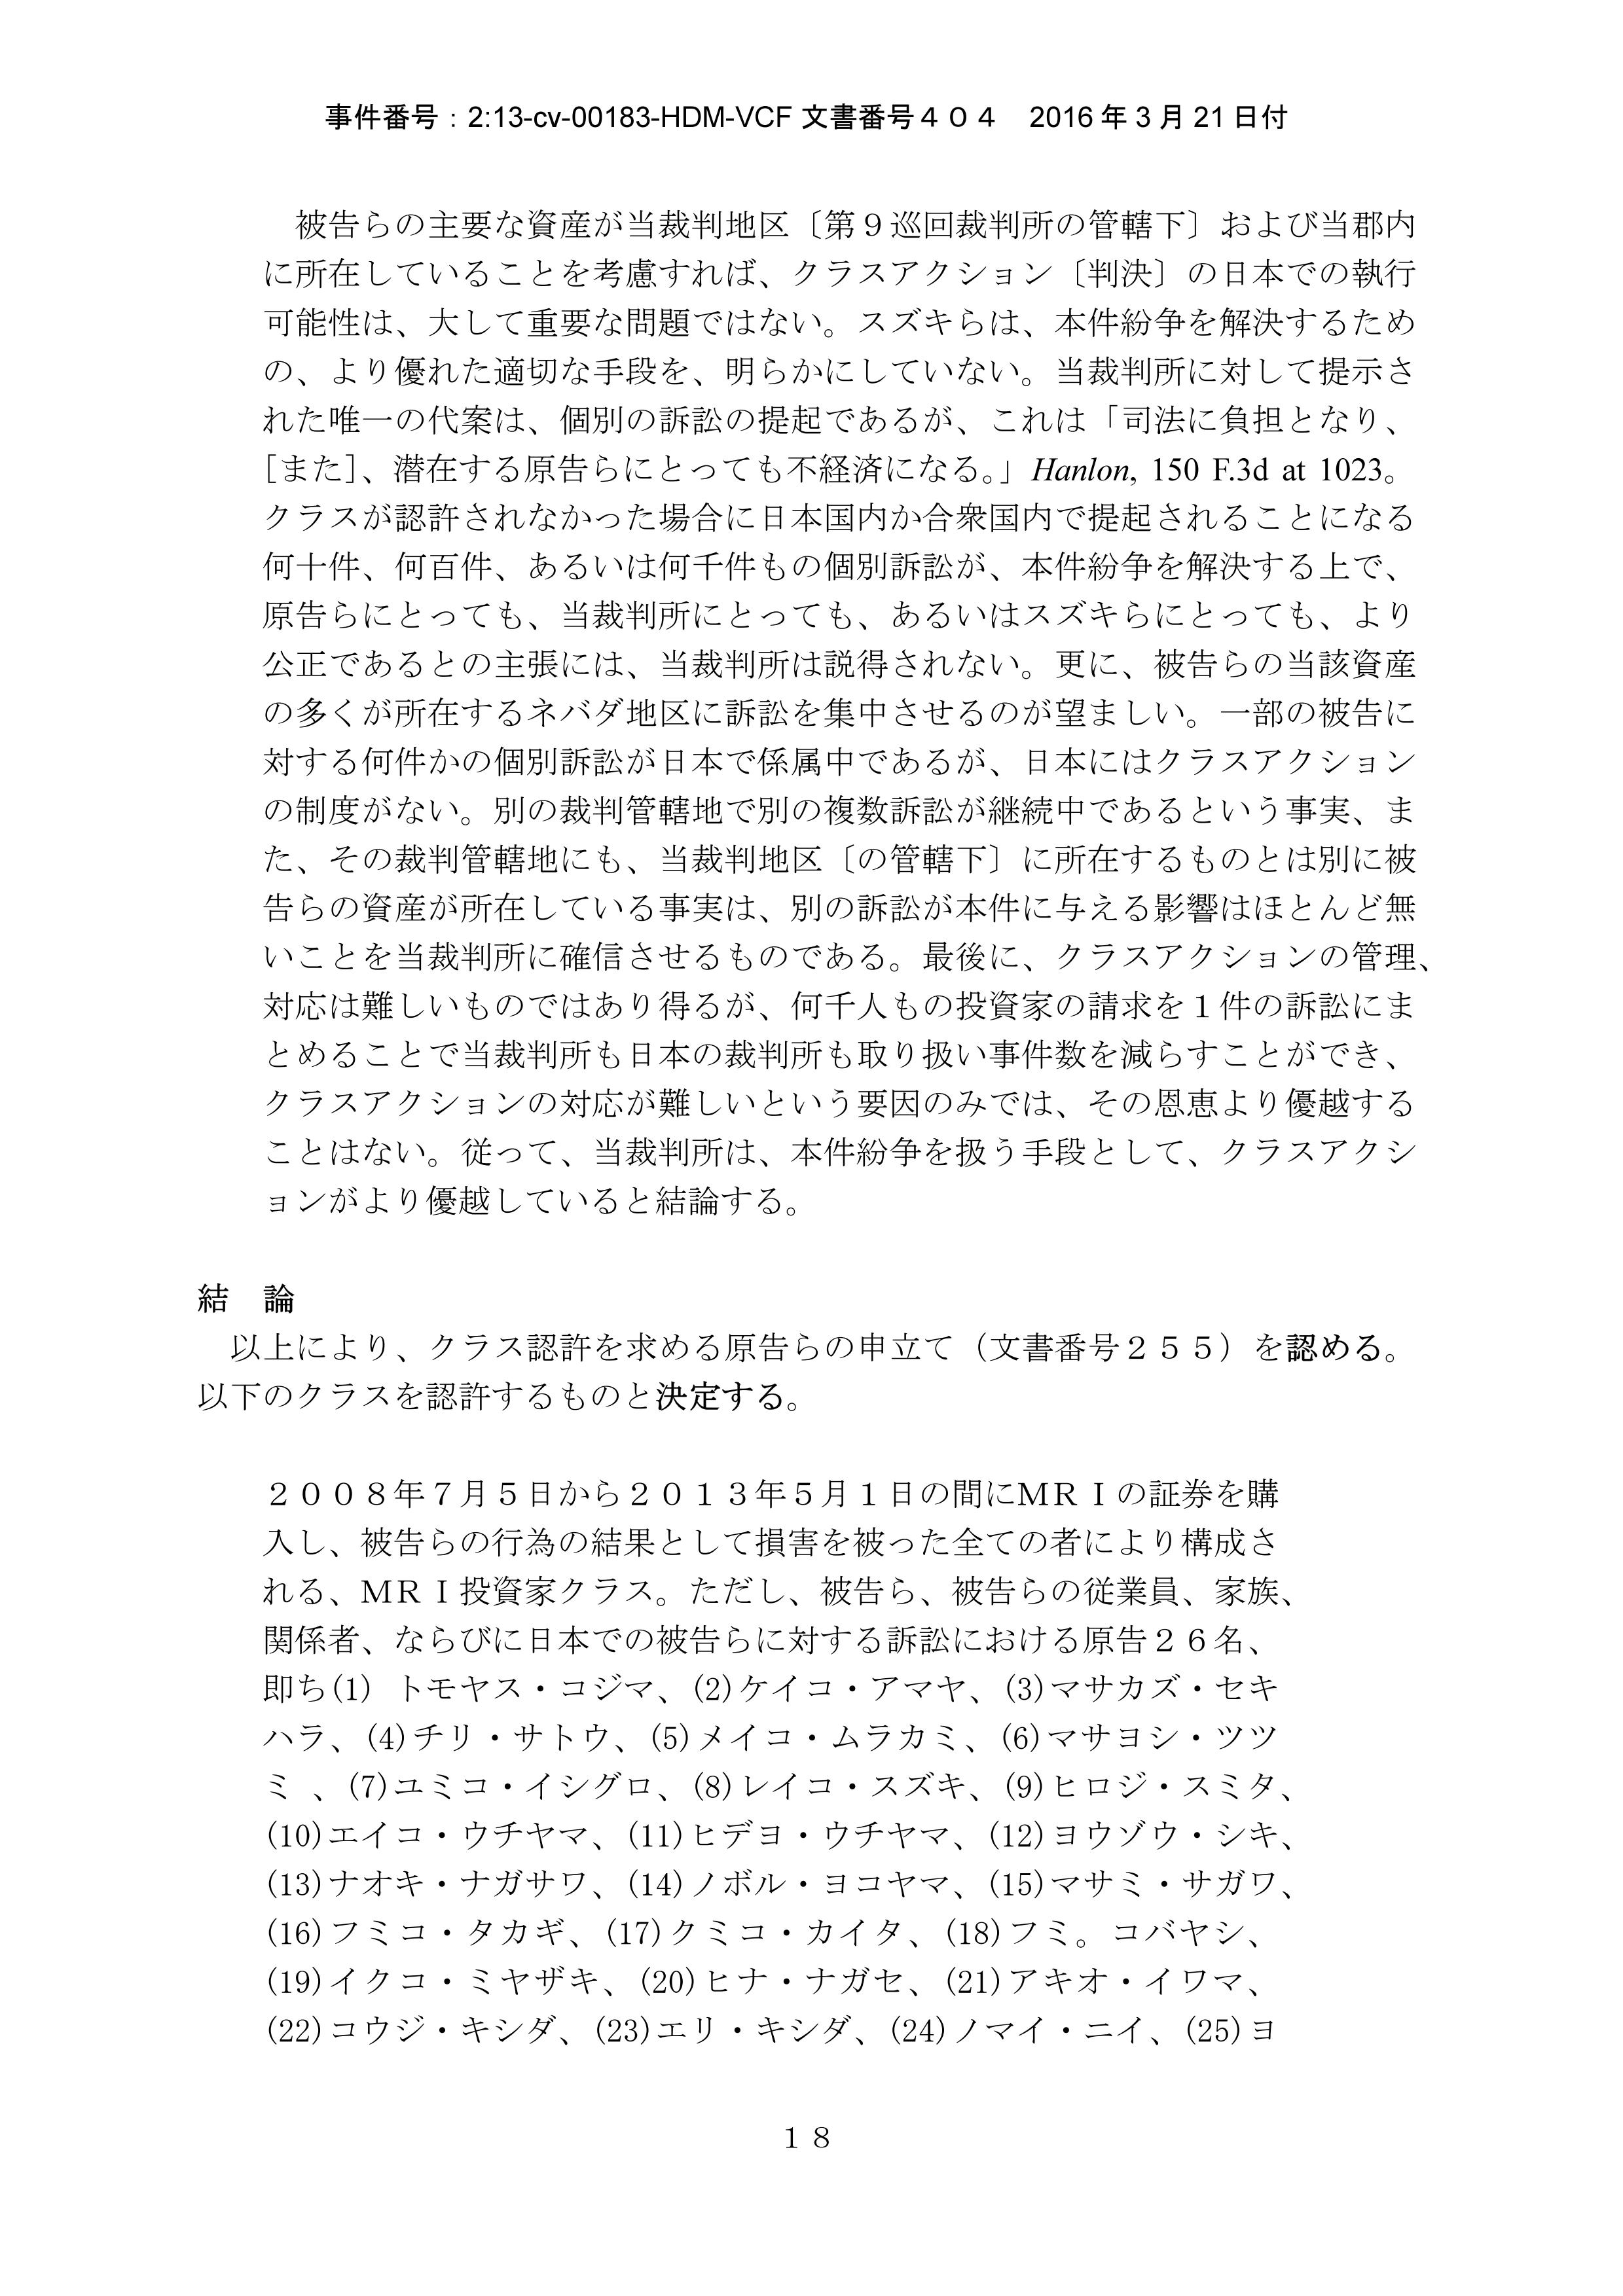 CA_Dkt 404_Order Granting Class Certification_Japanese translation_18